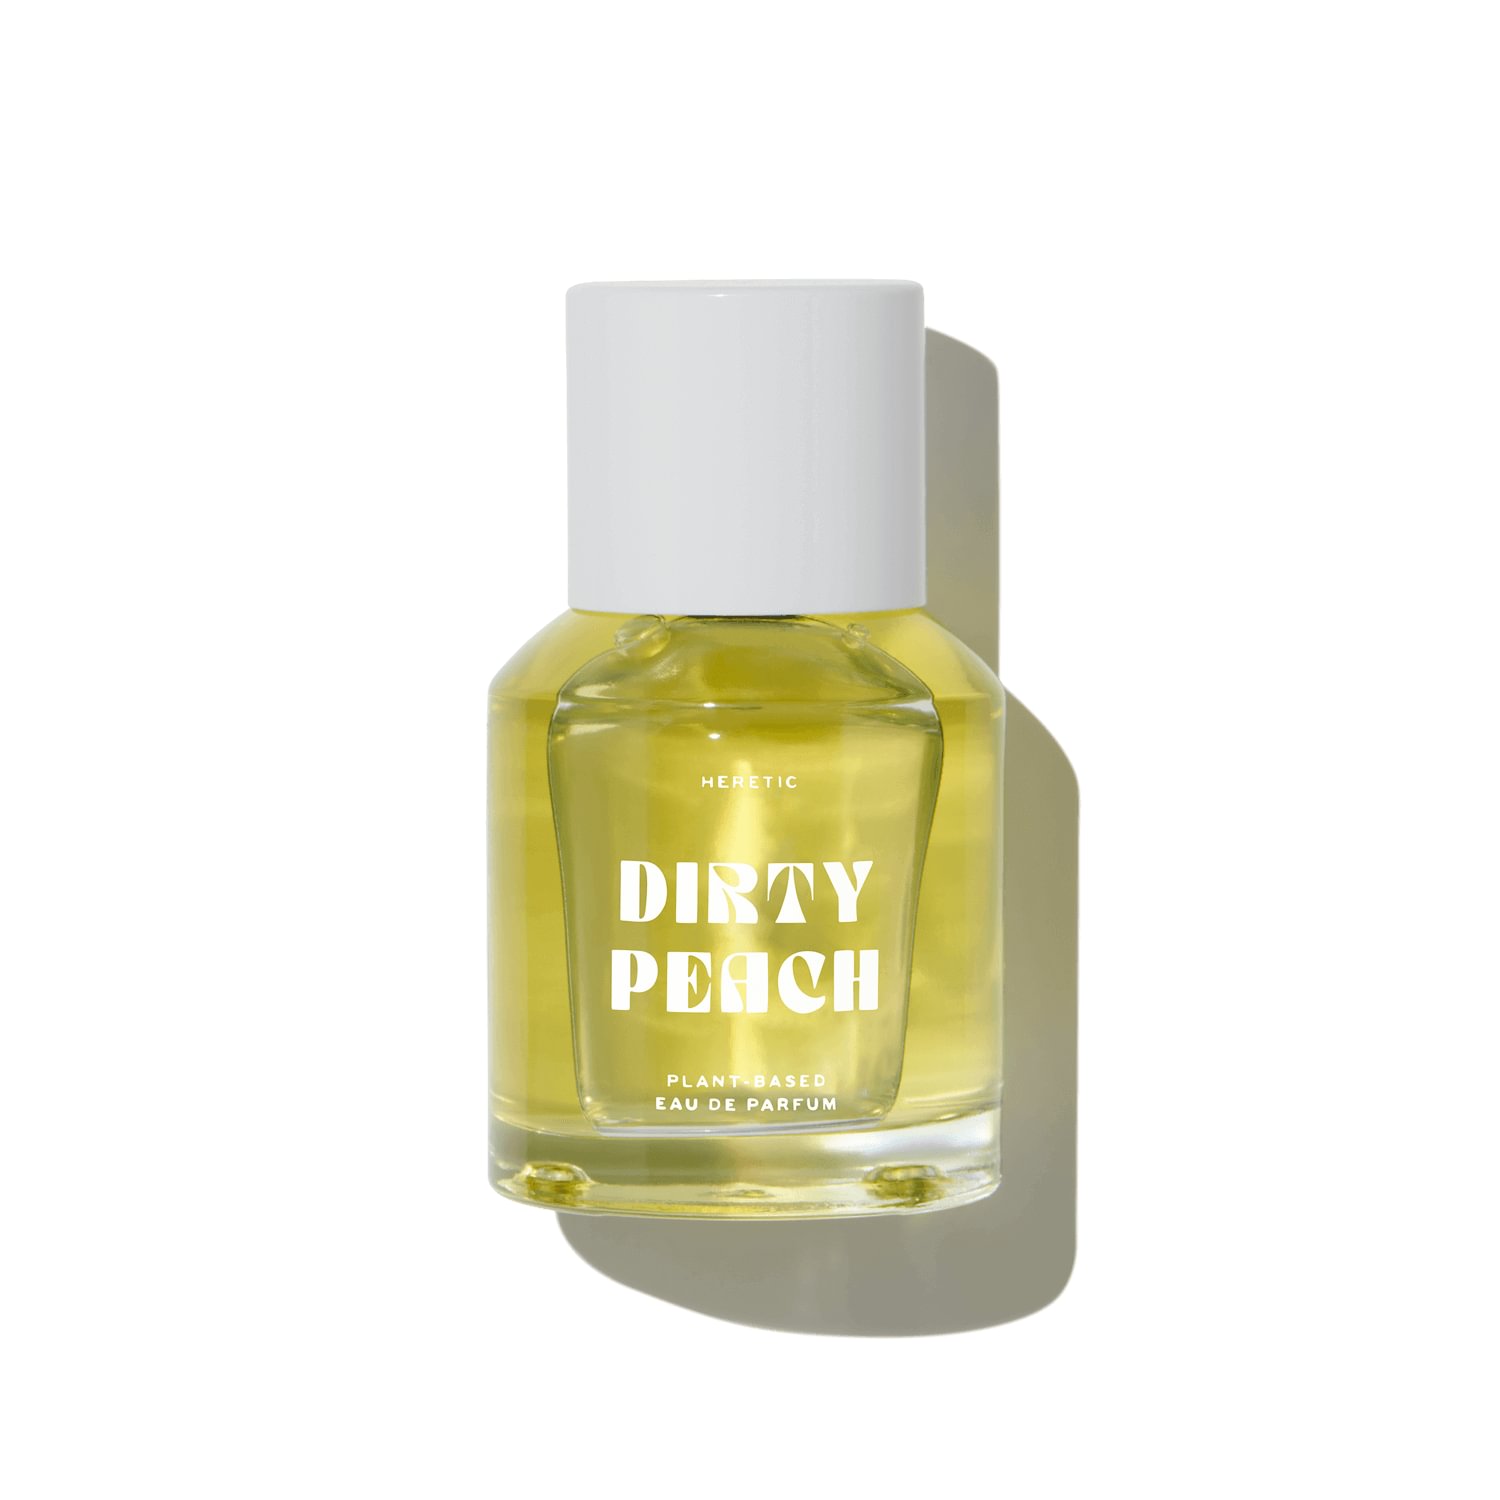 Heretic Parfum Dirty Peach for $165.00 | Scentbird